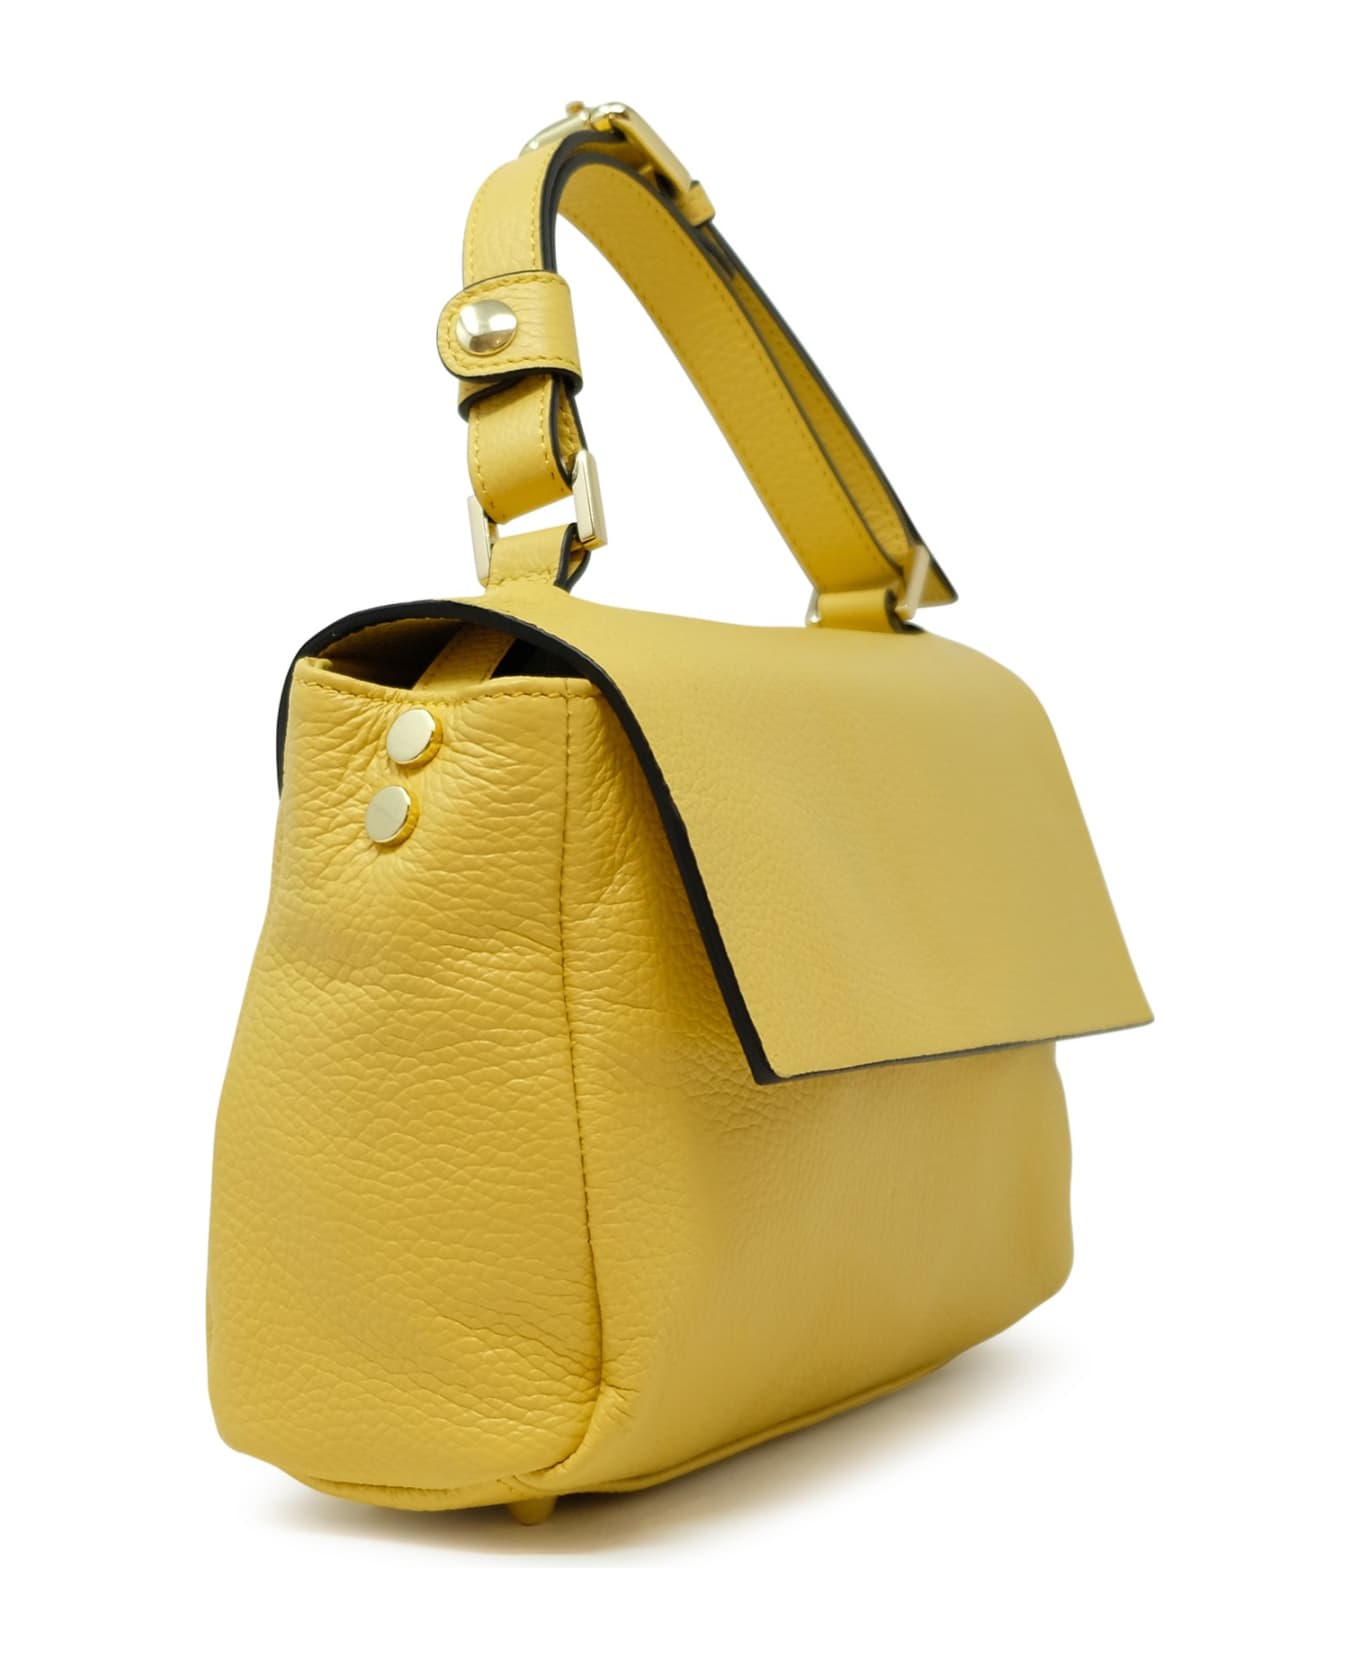 Avenue 67 Elettra Xs Yellow Leather Bag - YELLOW